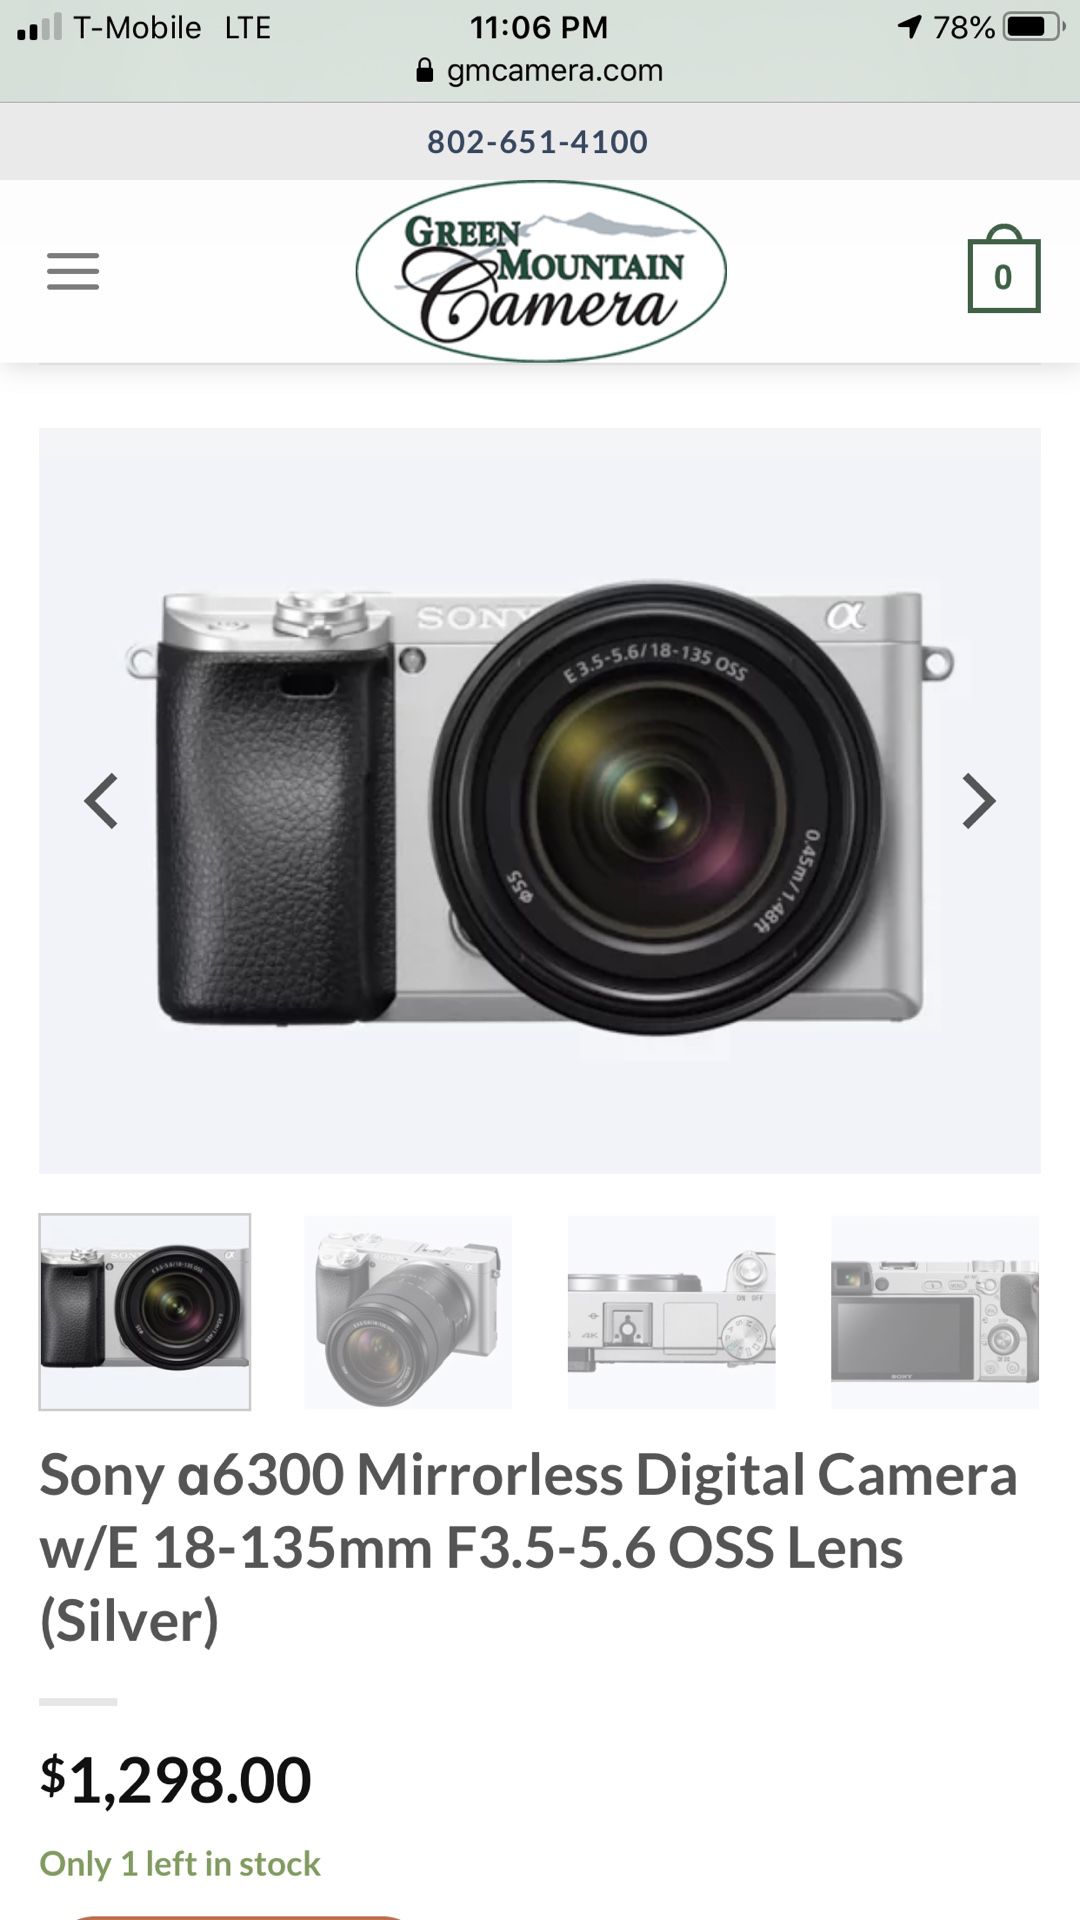 Sony Alpha a6300 Mirrorless Digital Camera with 18-135mm Lens